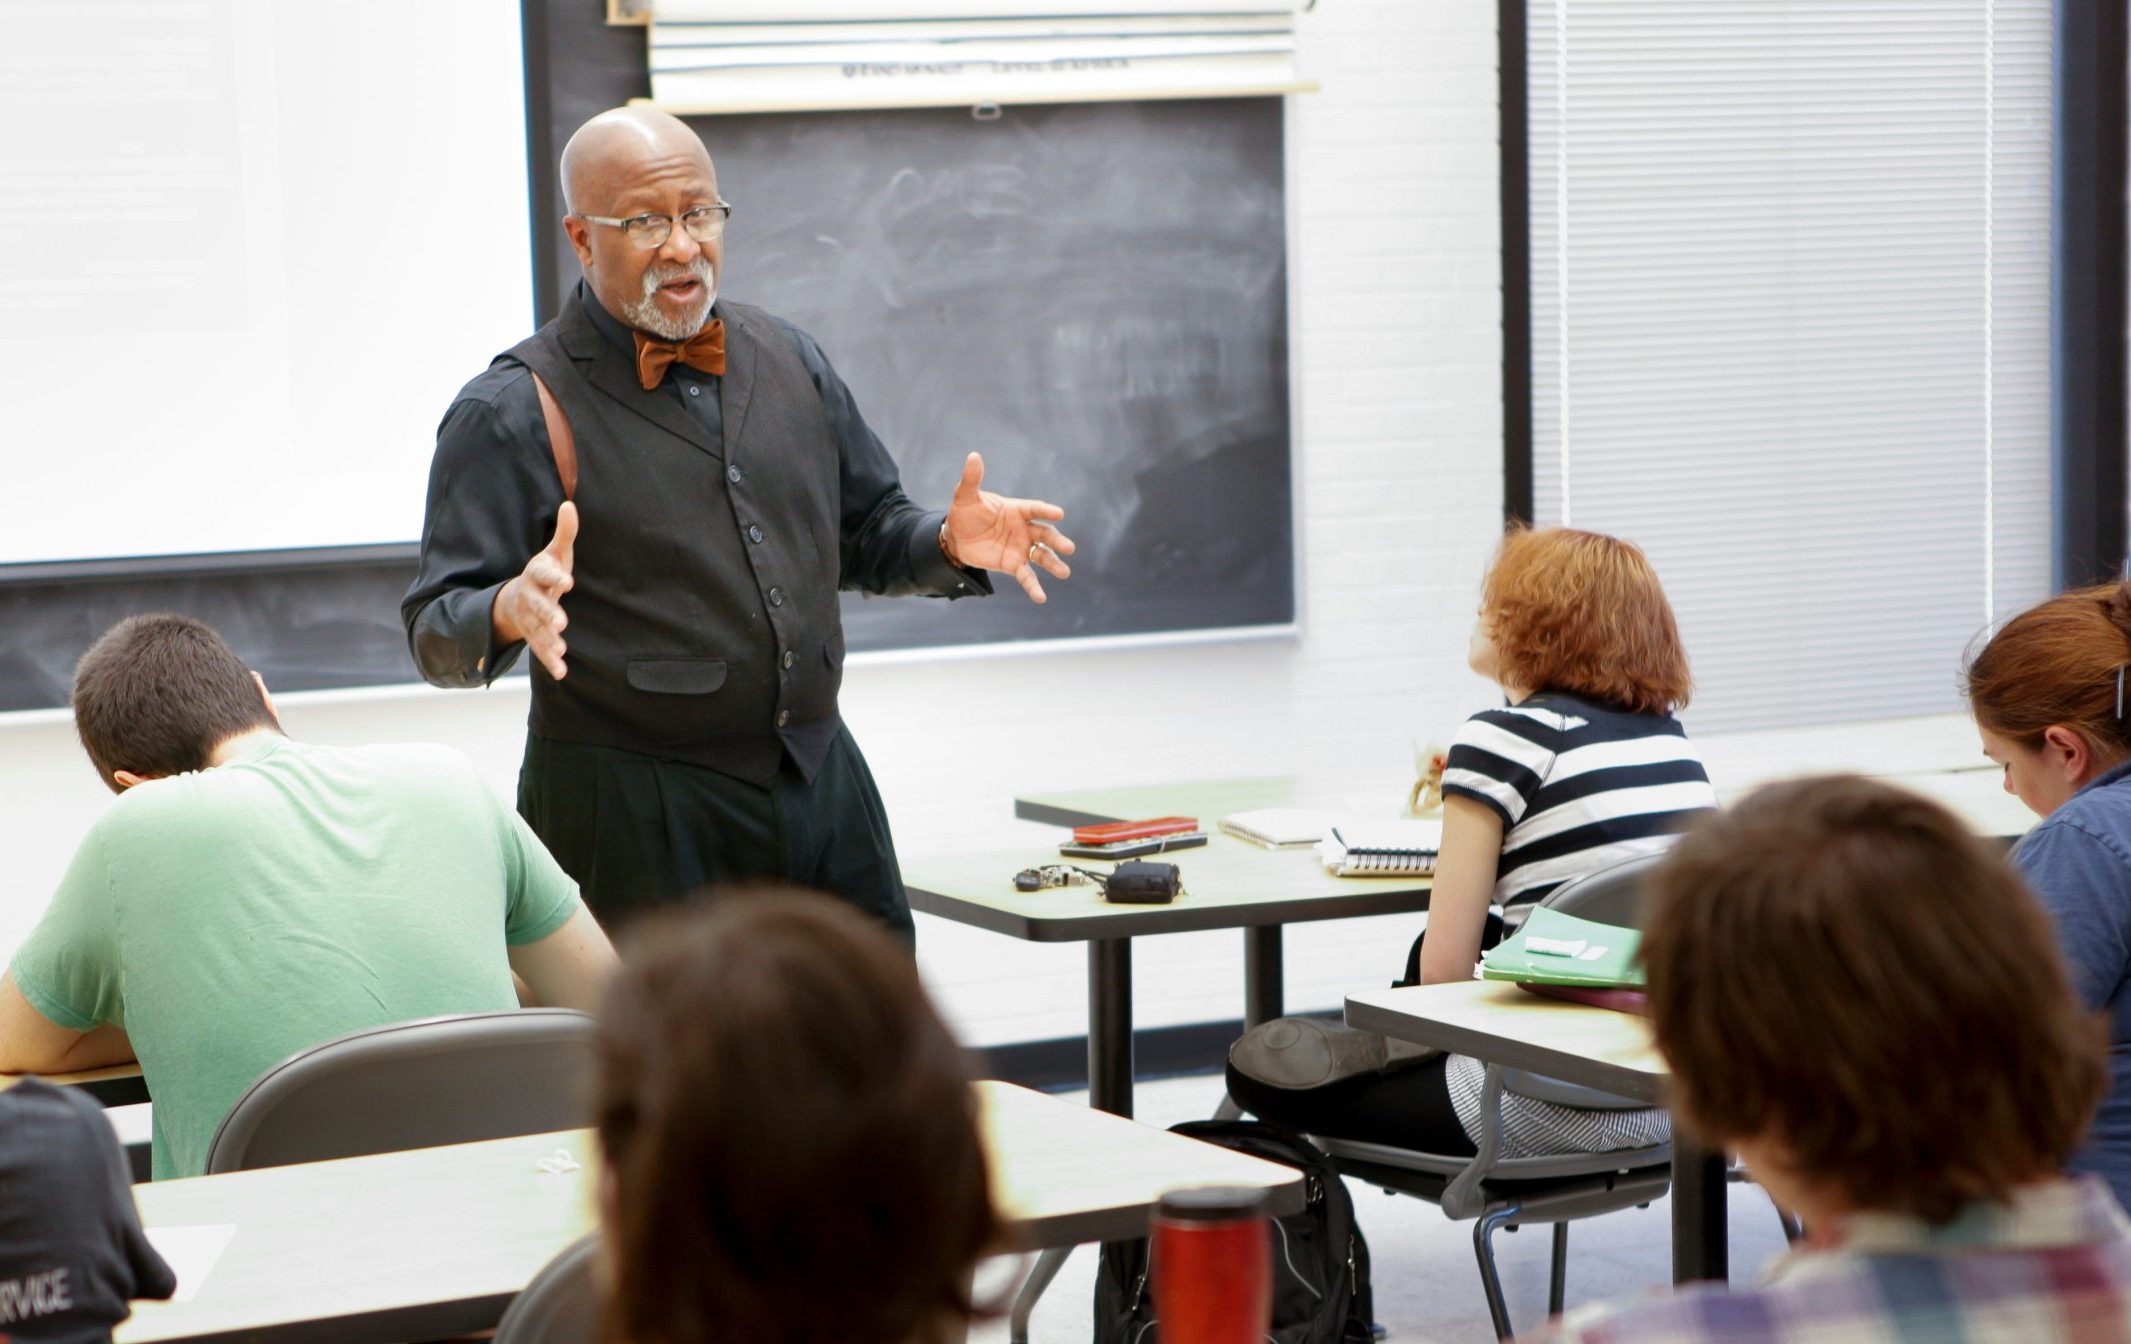 political science professor Dwight Mullen lecturing a class